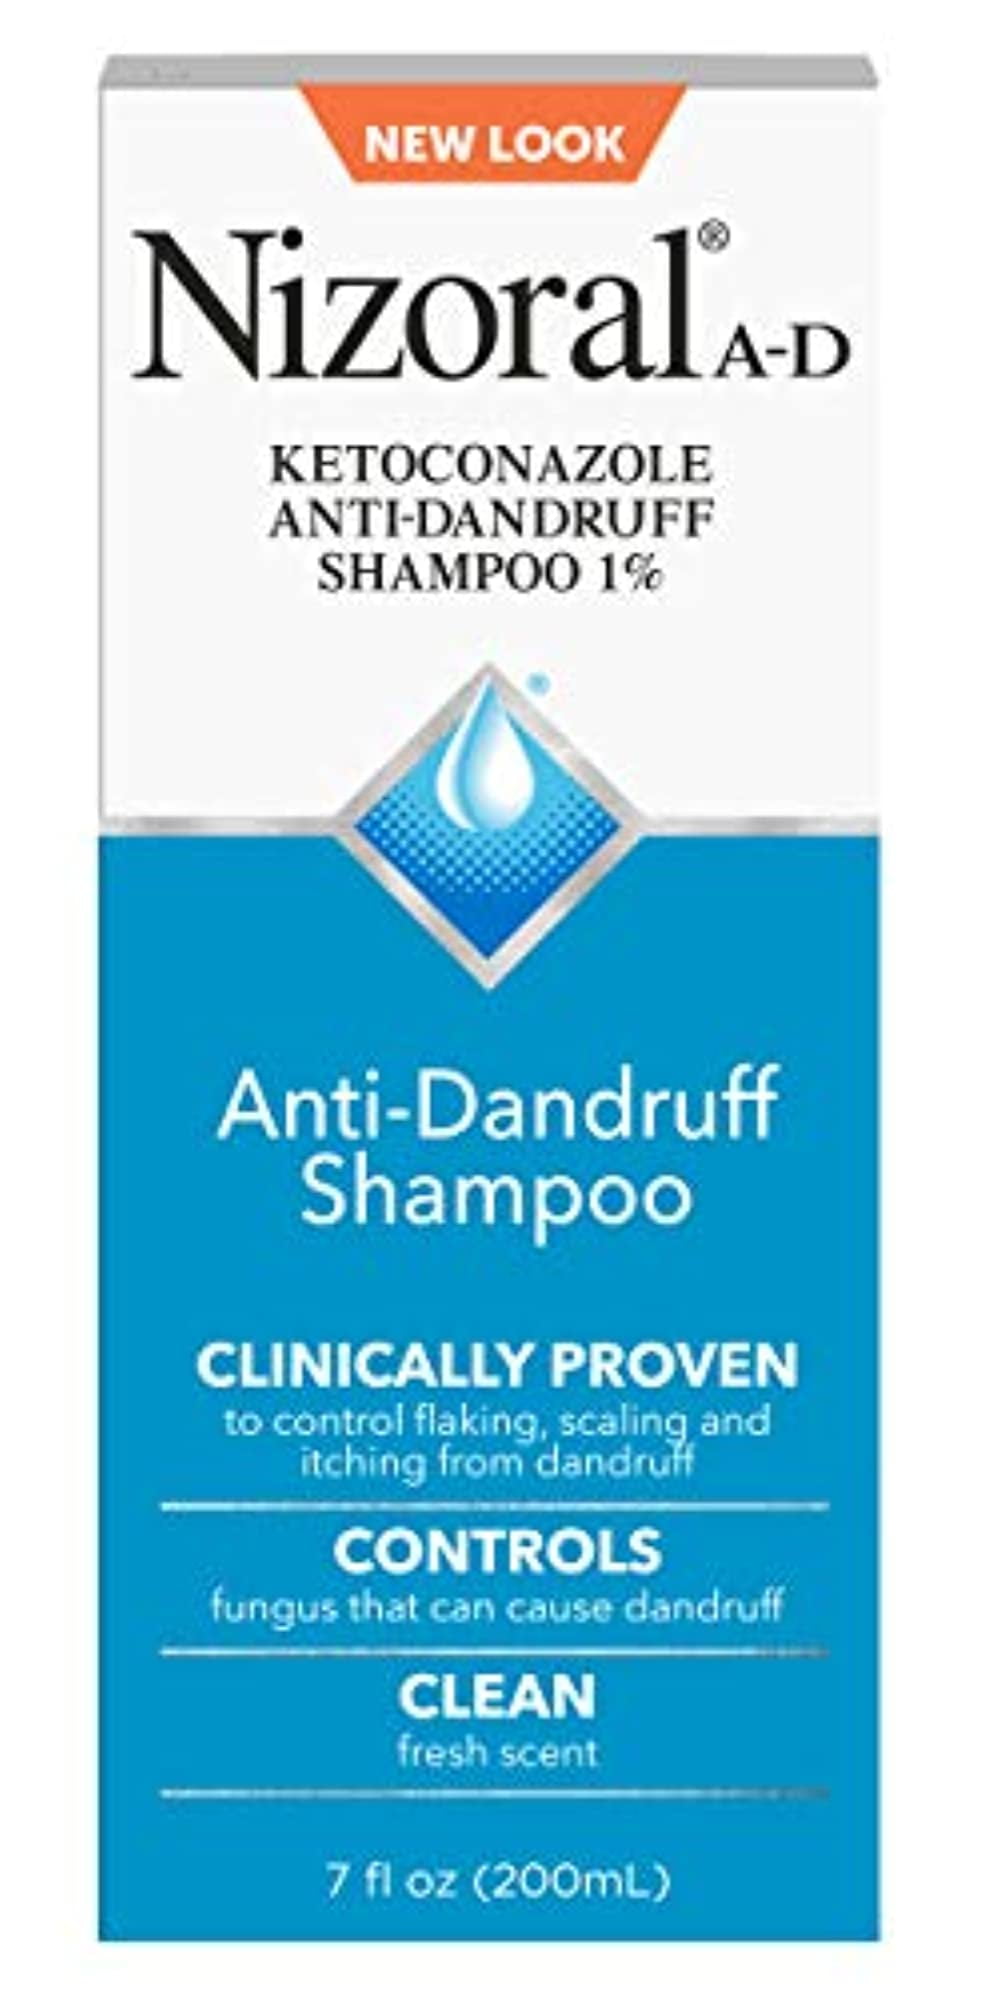 Nizoral Anti-Dandruff Ketoconazole 1% Shampoo - oz (200 mL) Walmart.com